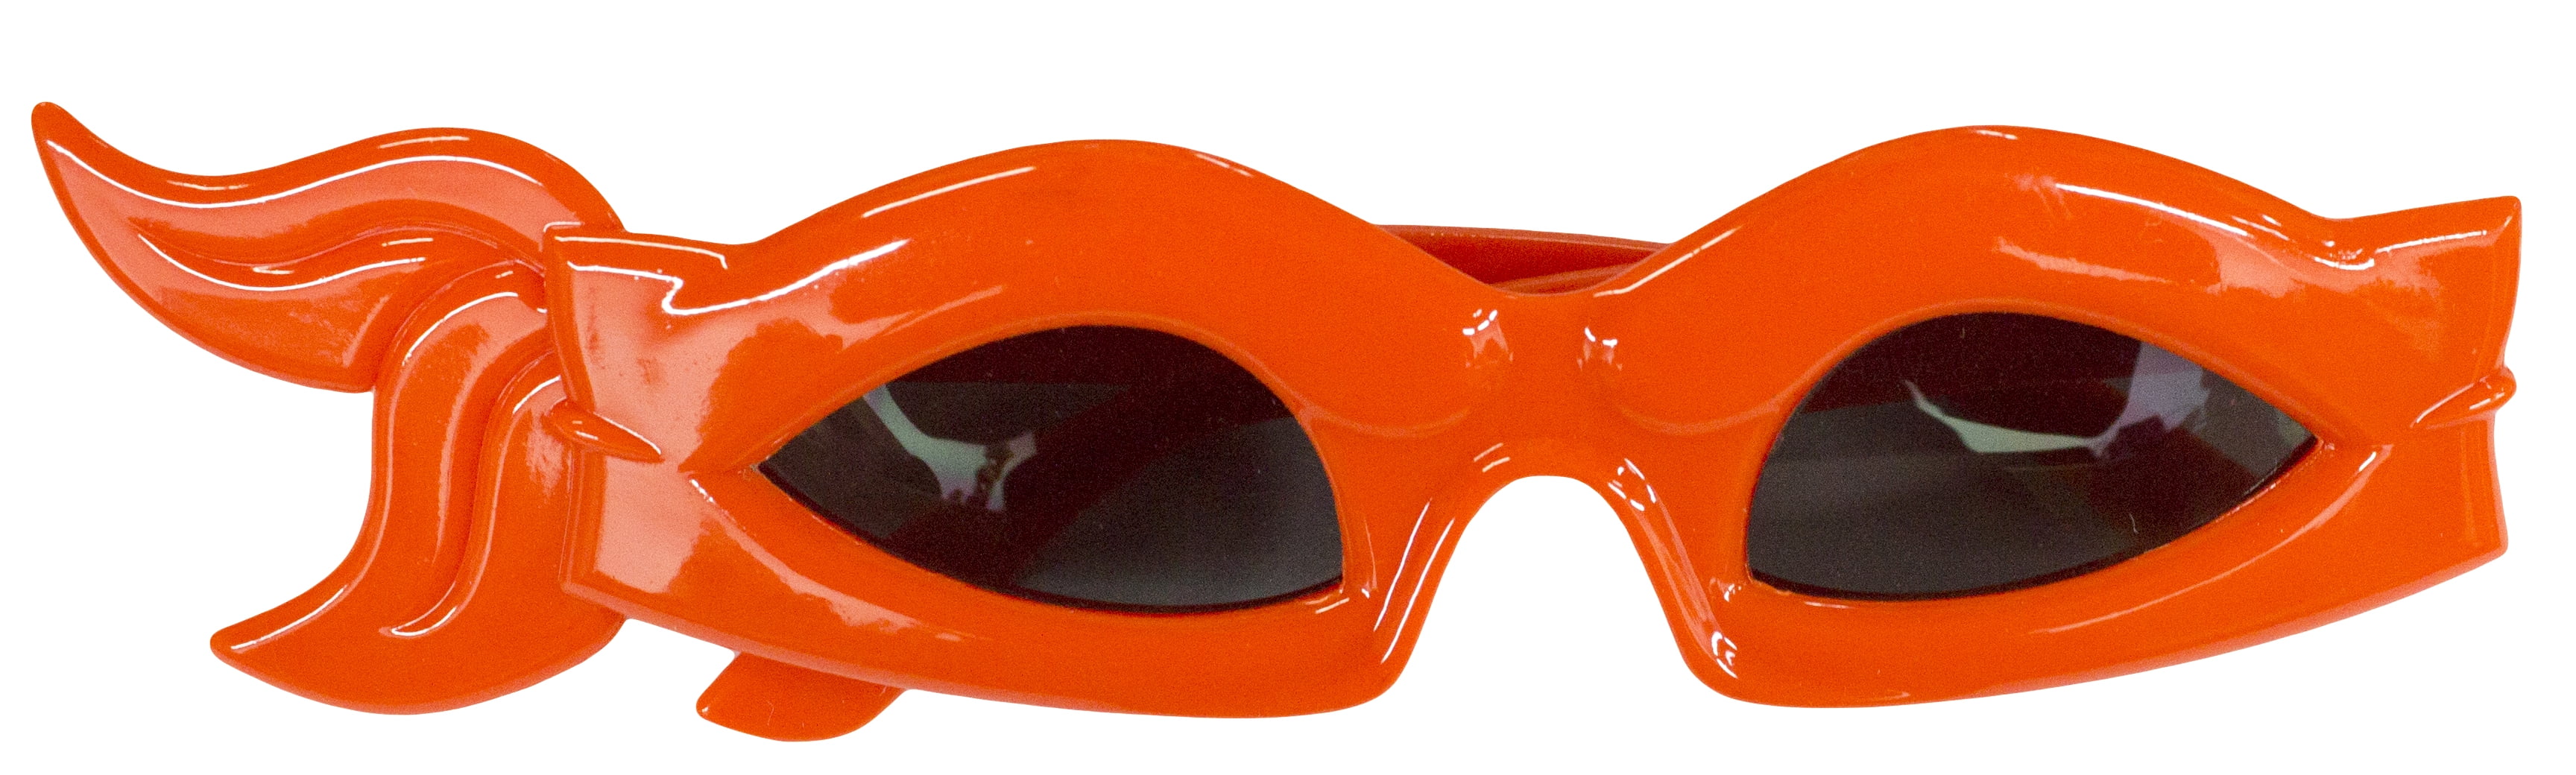 Sunstaches Adult Sunglasses TMNT Michaelangelo orange Mask Sun-Staches New 